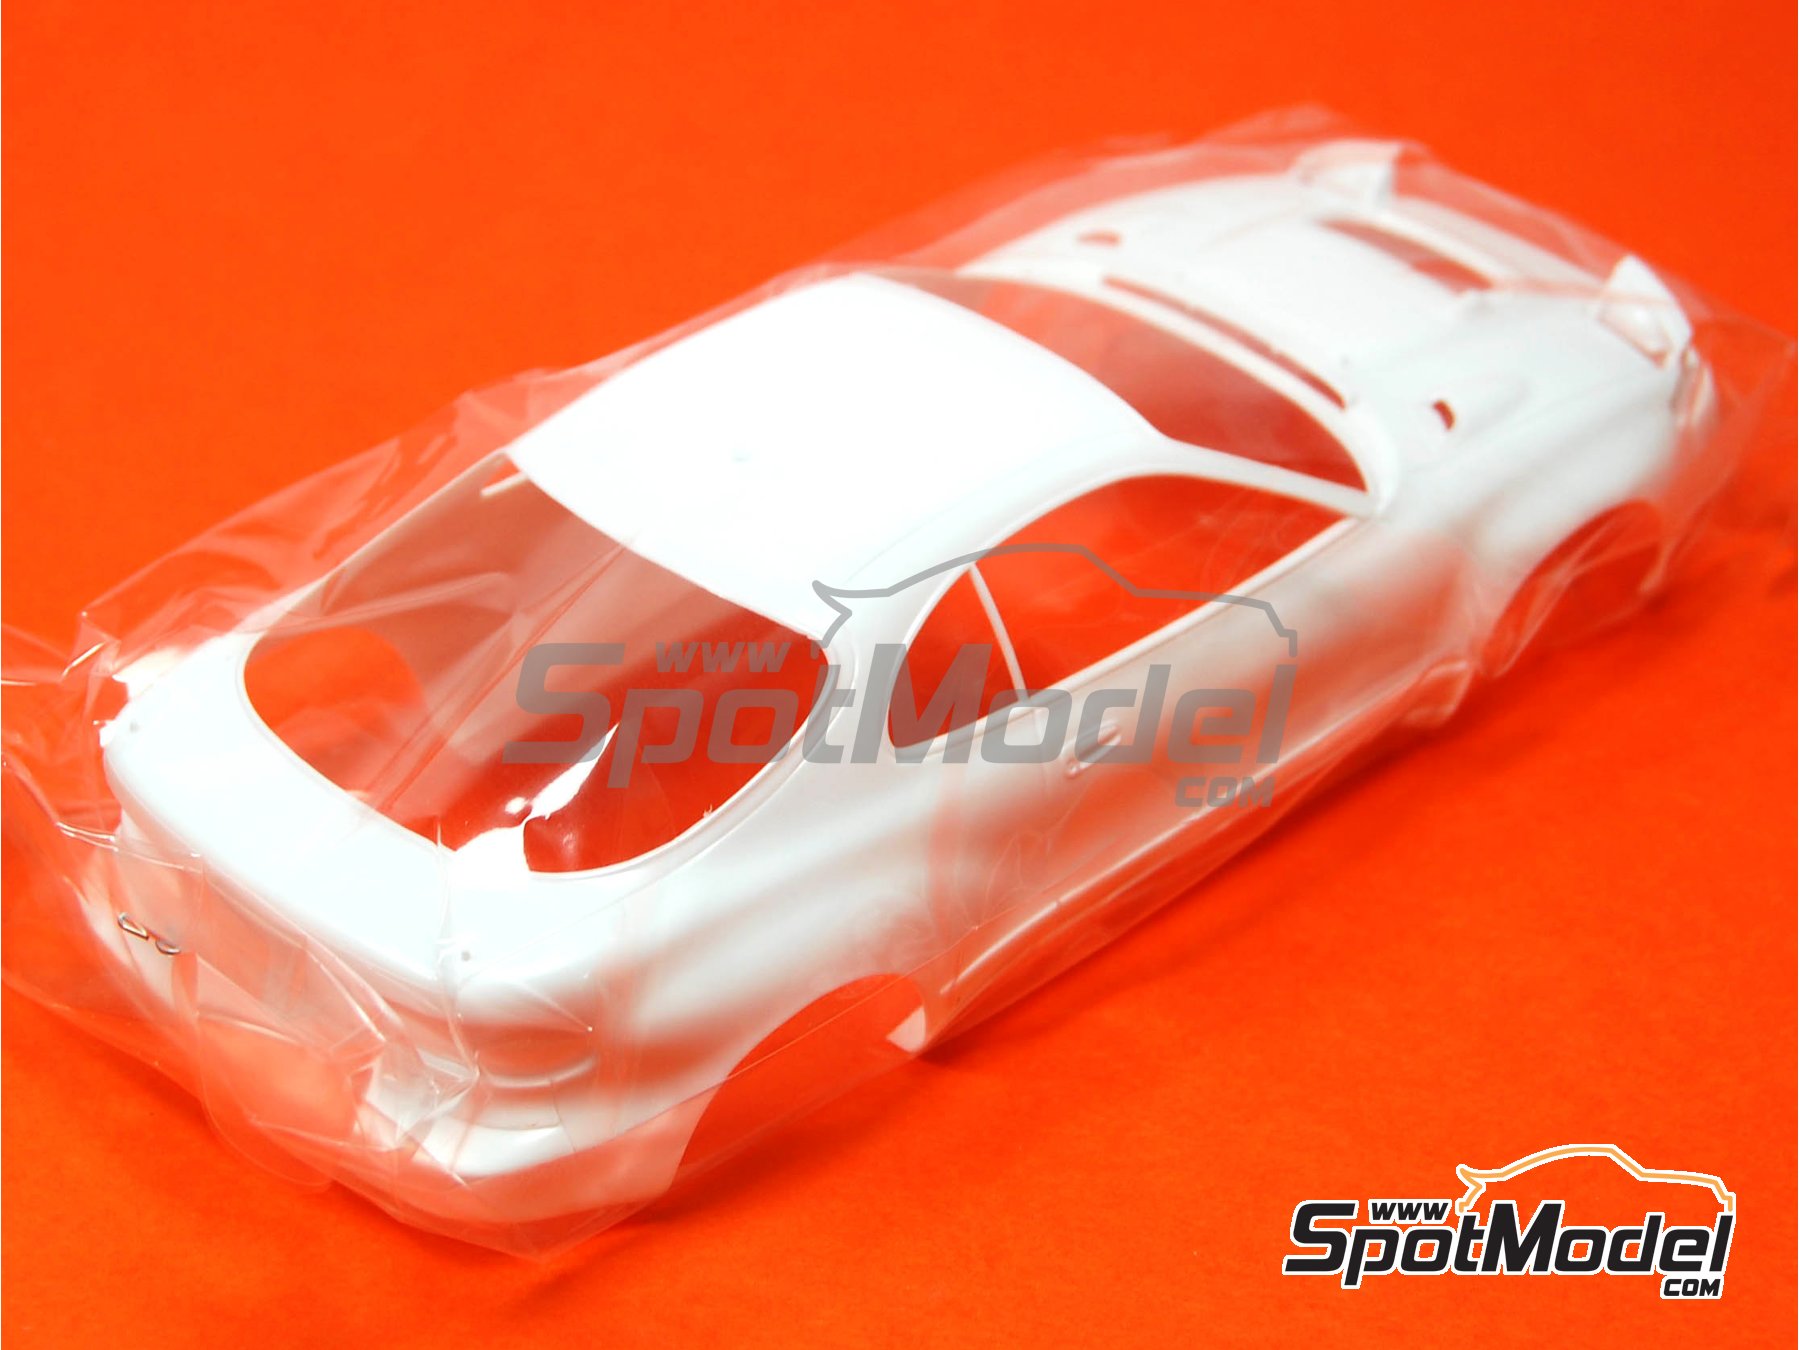 Tamiya 1/24 Toyota Celica Gt-four Plastic Car Model Kit # 24133 Factory for sale online 